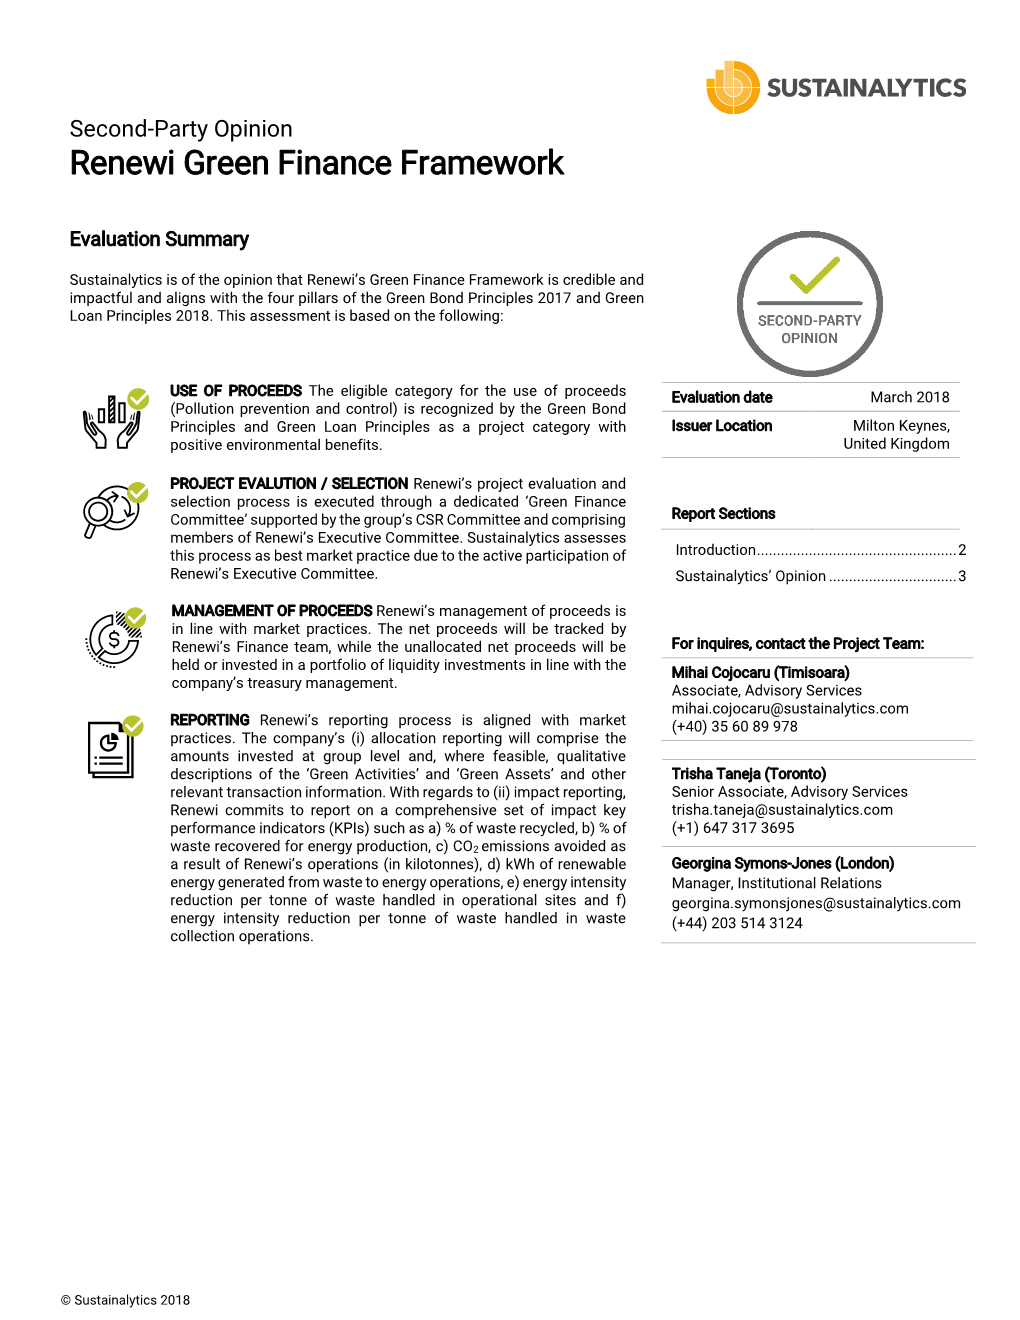 Renewi Green Finance Framework Second-Party Opinion